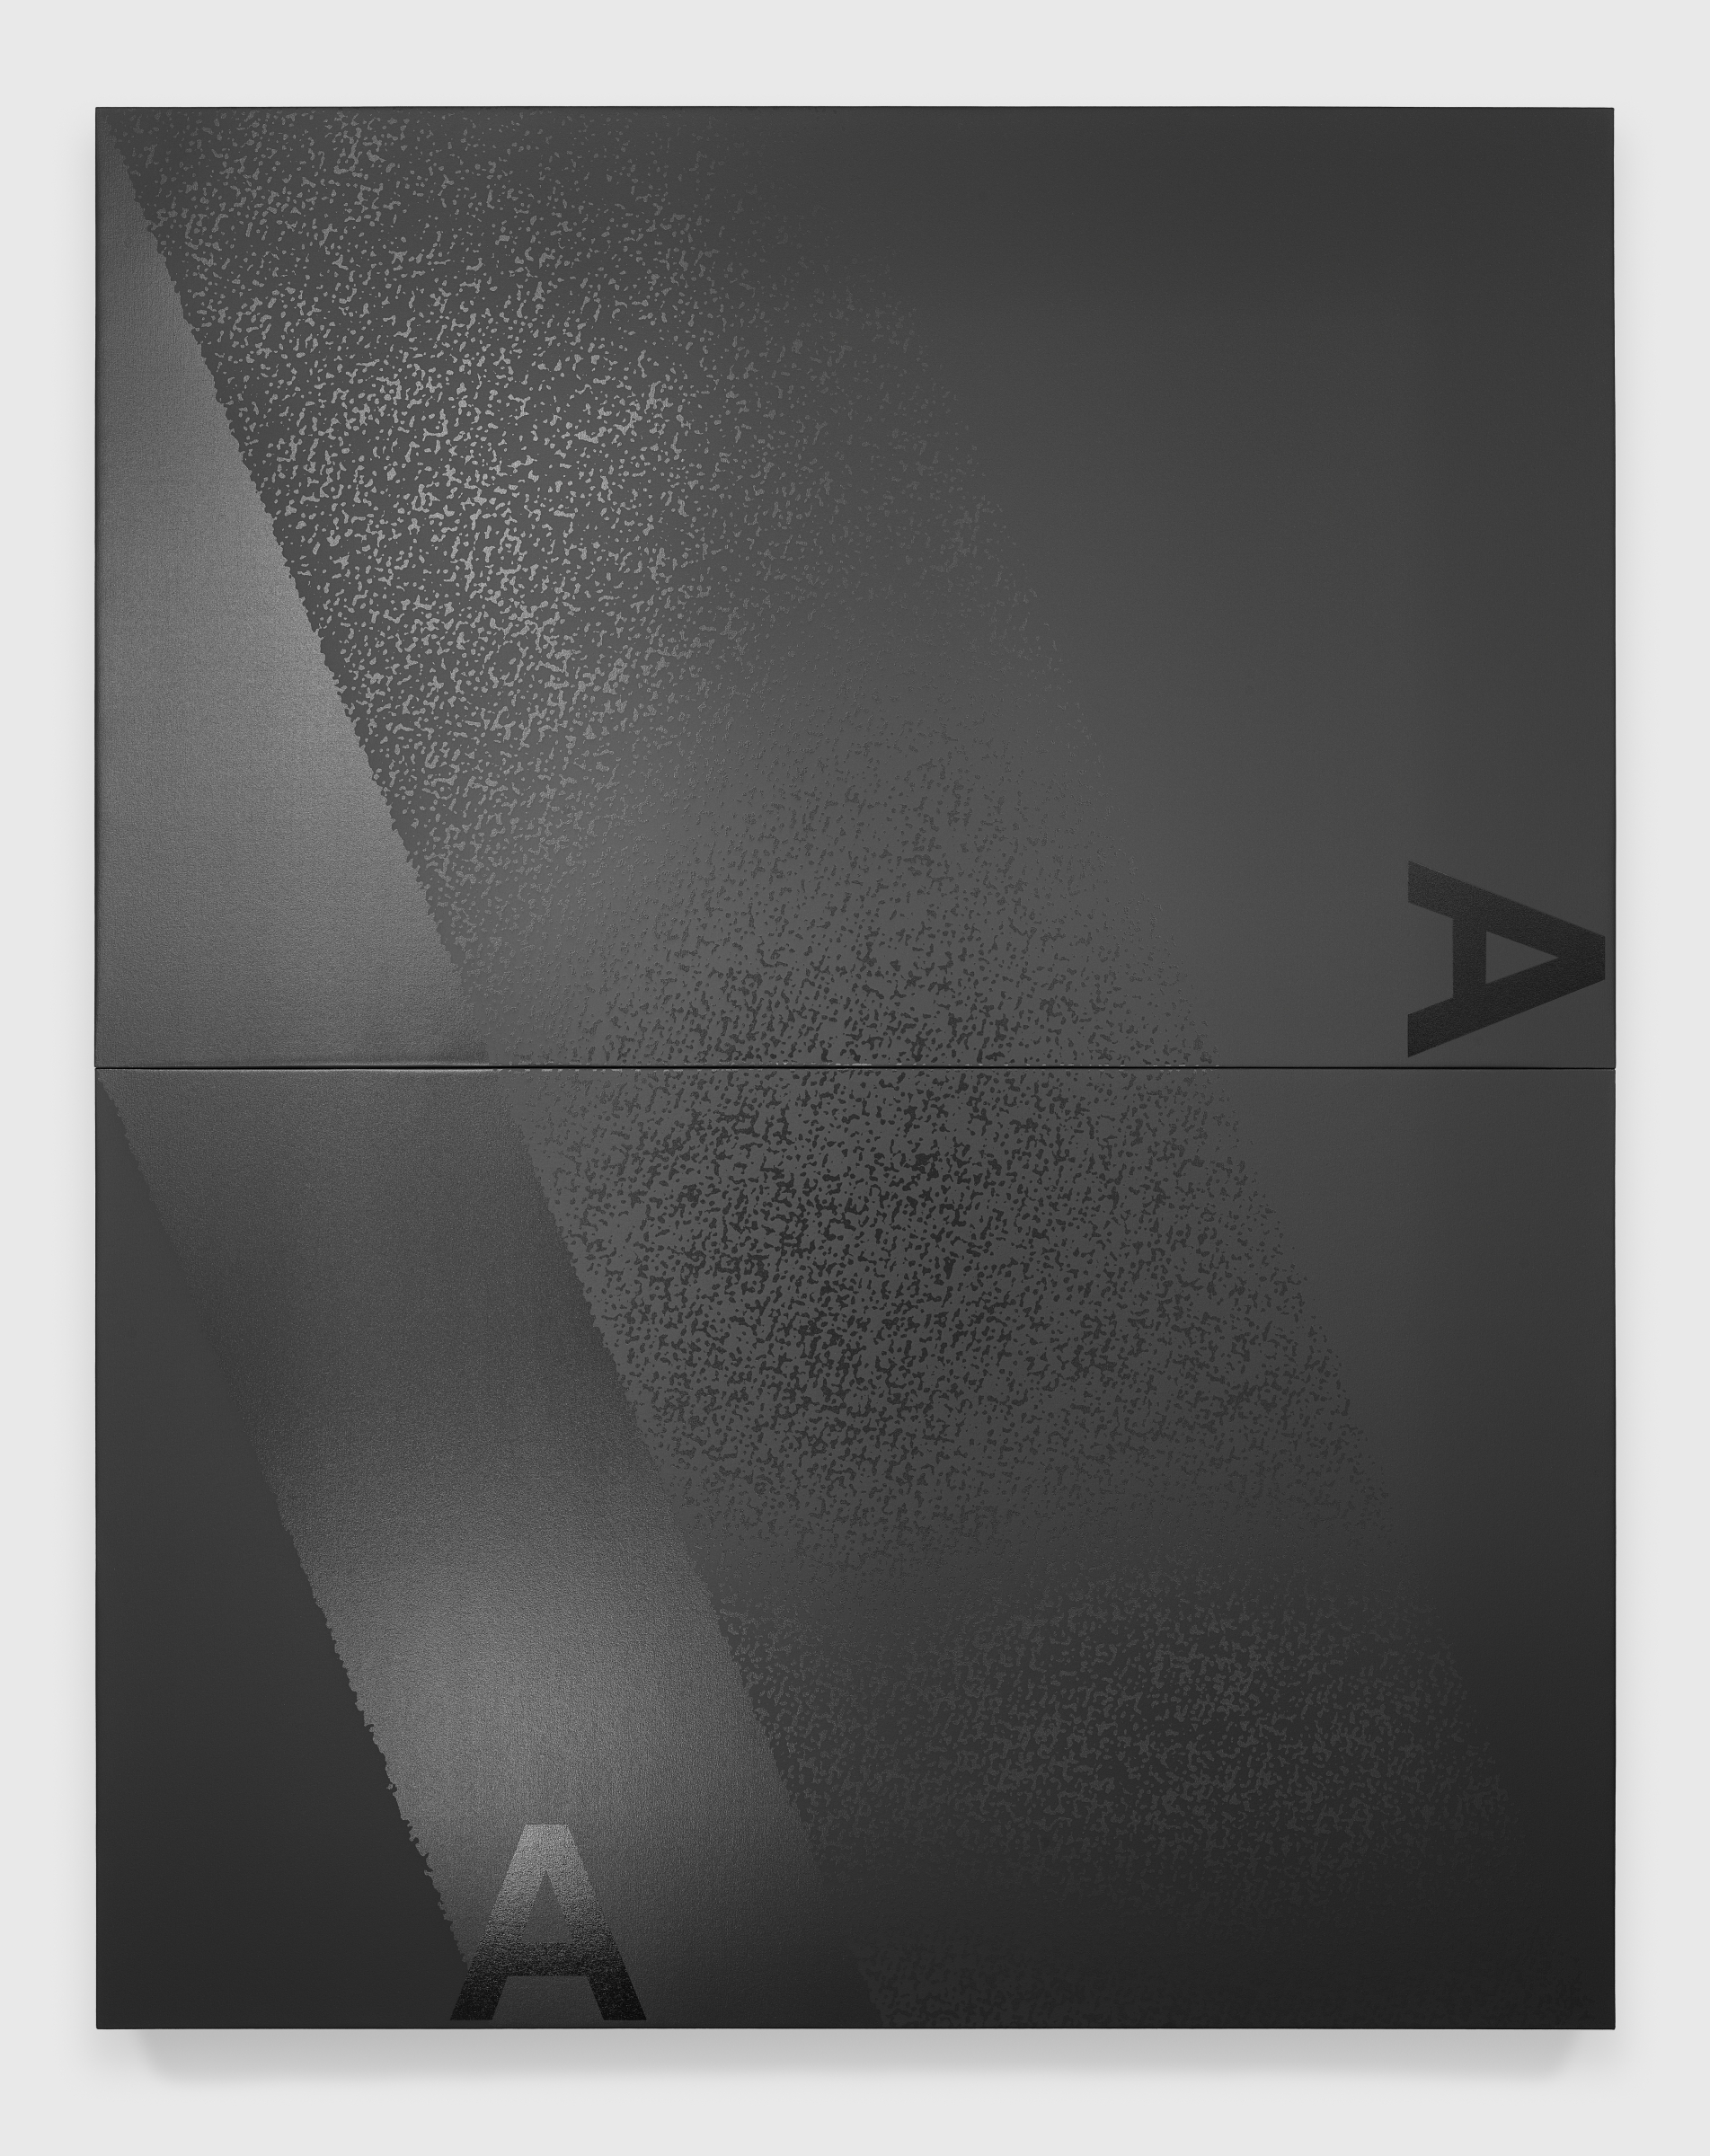 Black Dada (A/A), 2019
silkscreen ink on canvas
96 x 76 inches (overall)
&amp;nbsp;

&amp;nbsp;